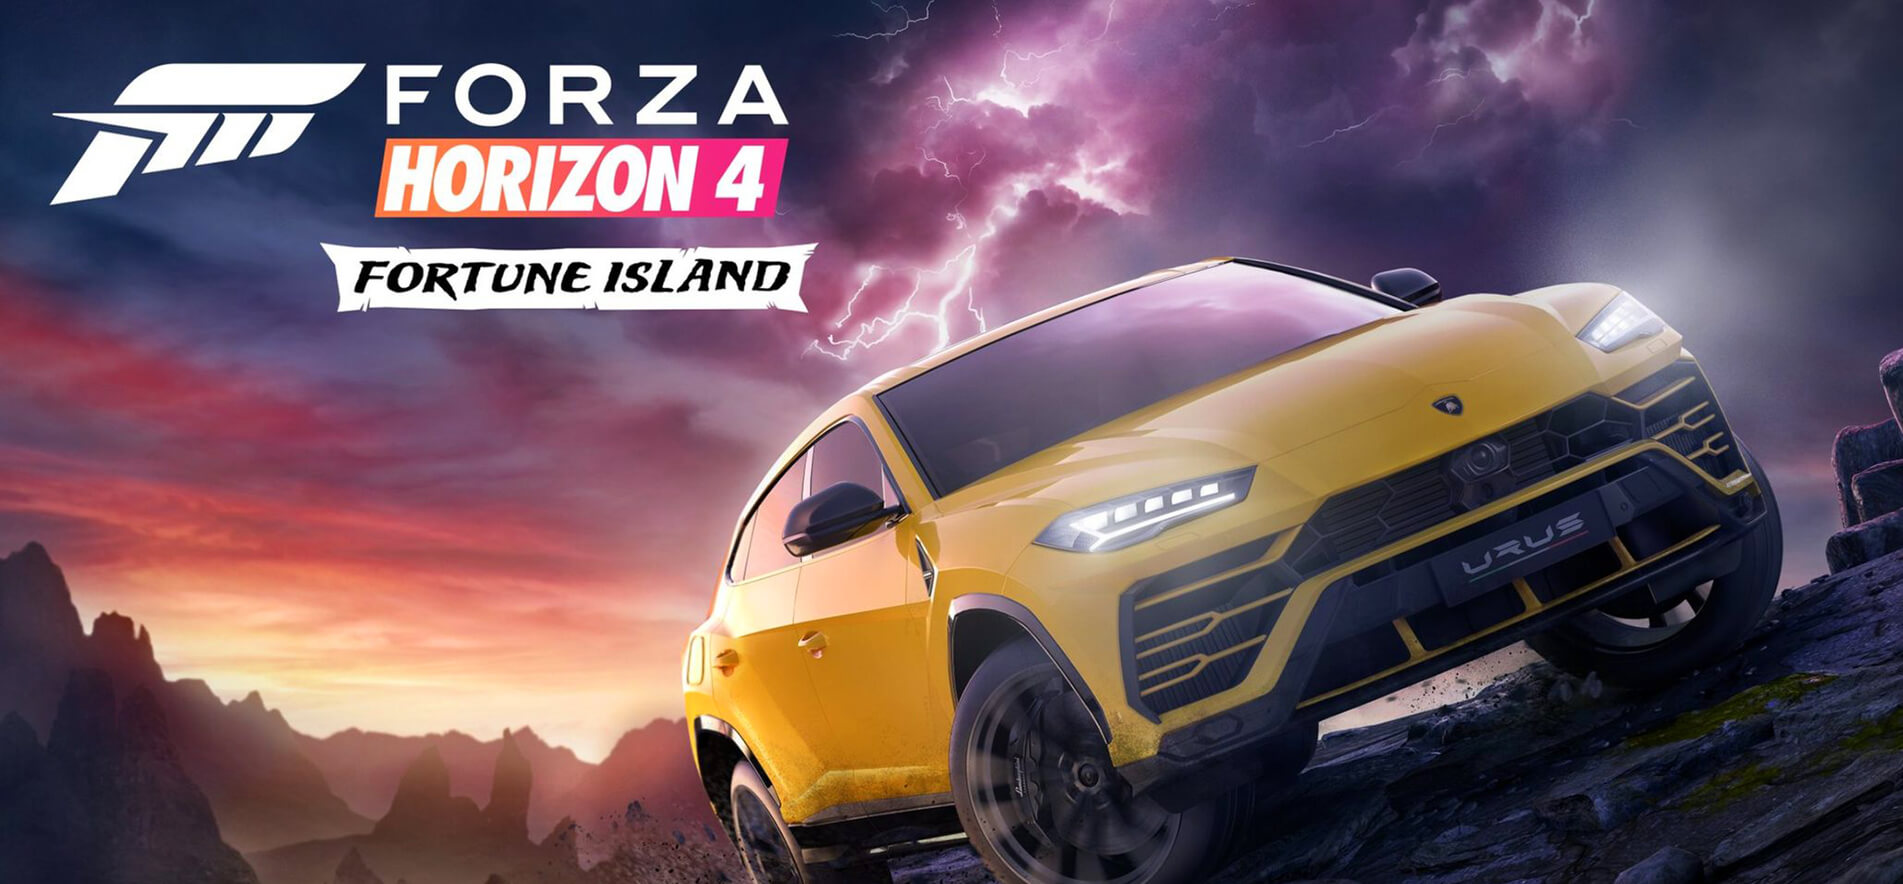 Анонсировано первое дополнение Forza Horizon 4 (фото)